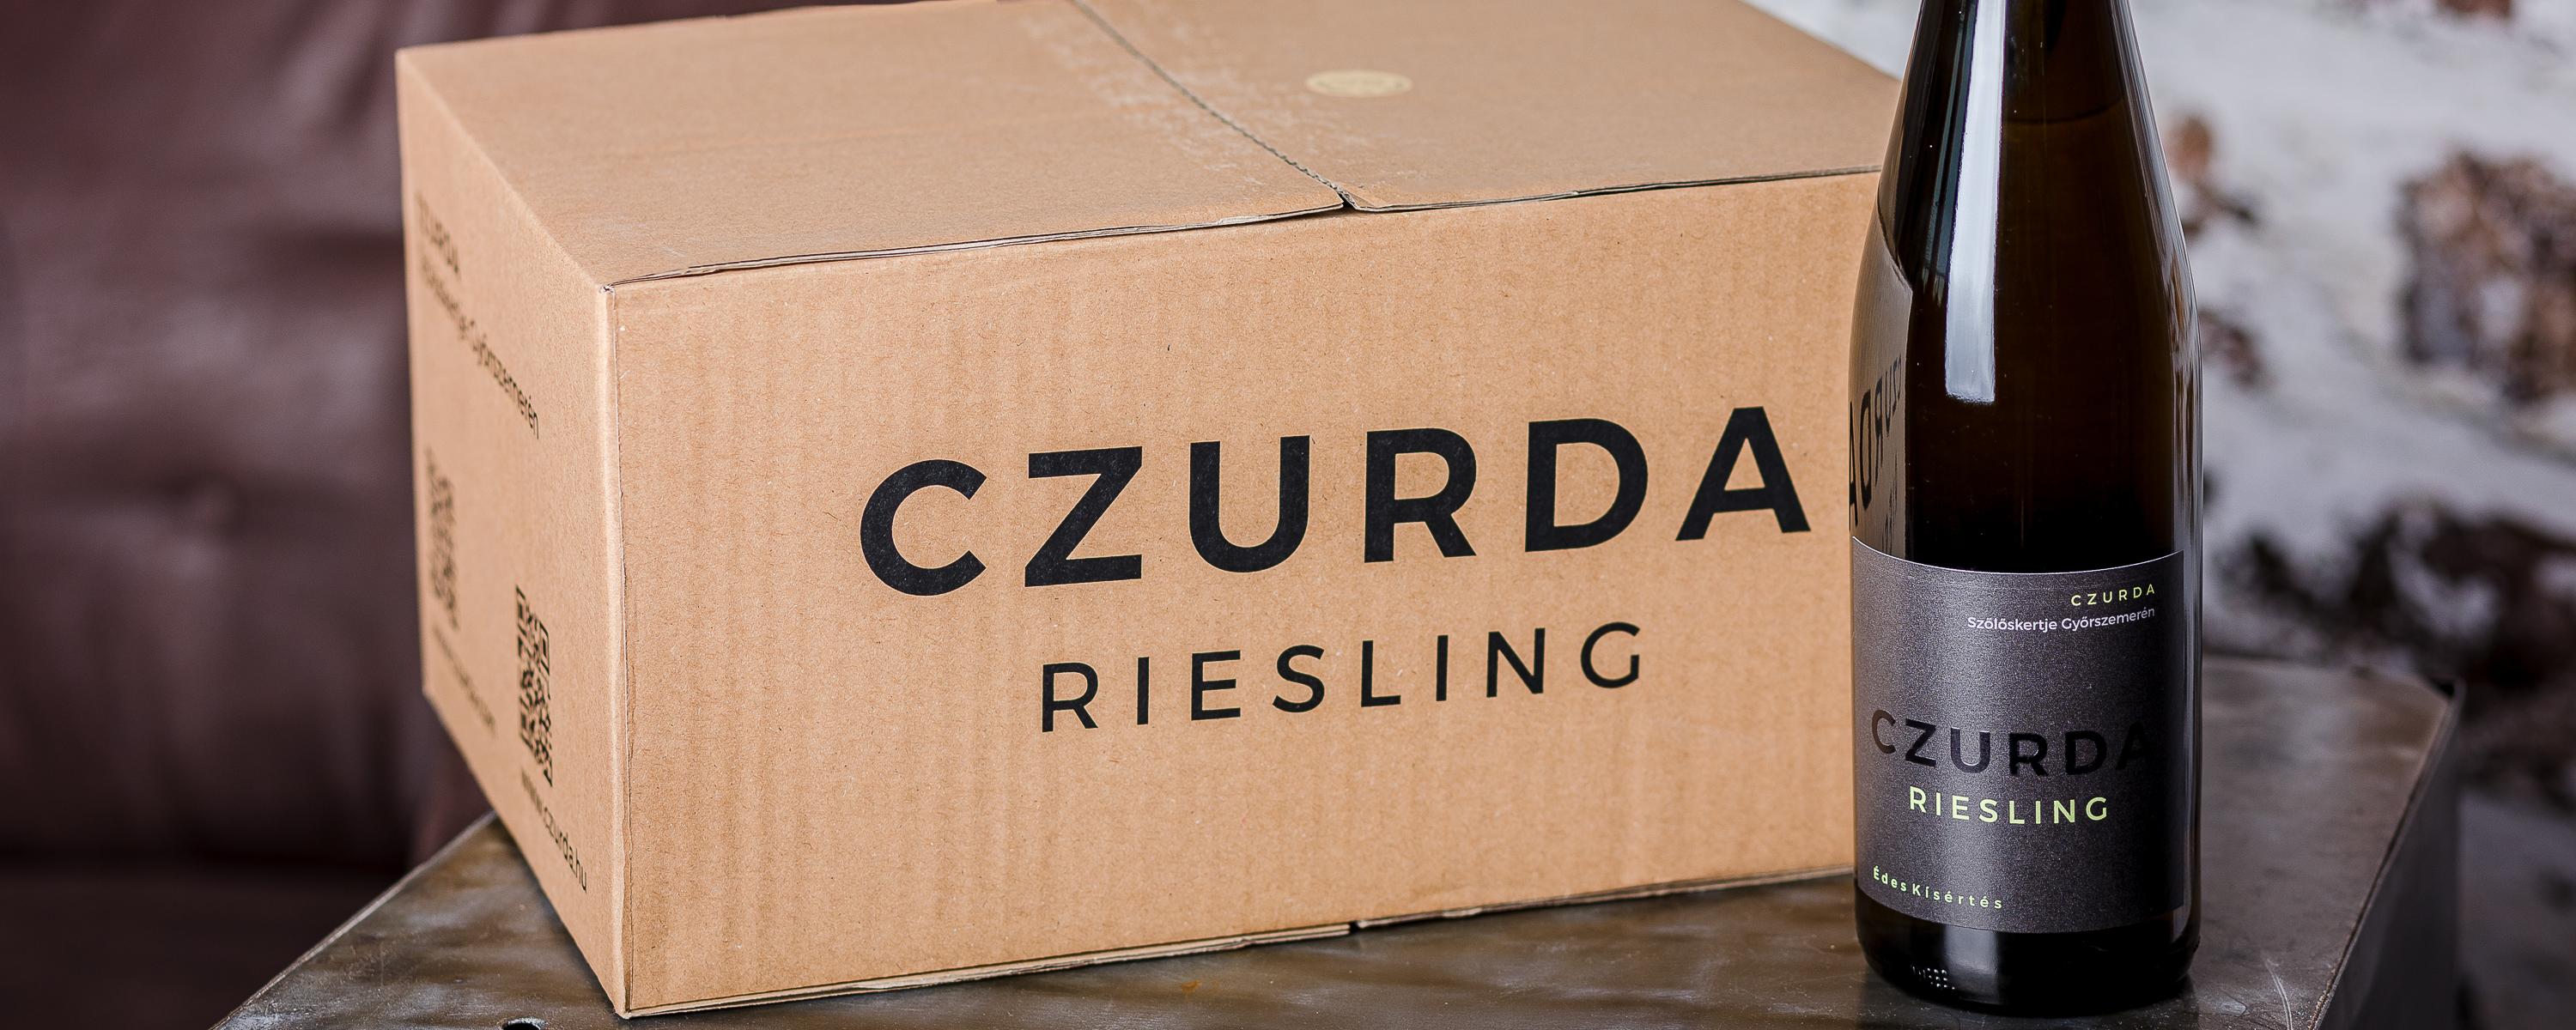 Czurda & Friends - All you need is Riesling